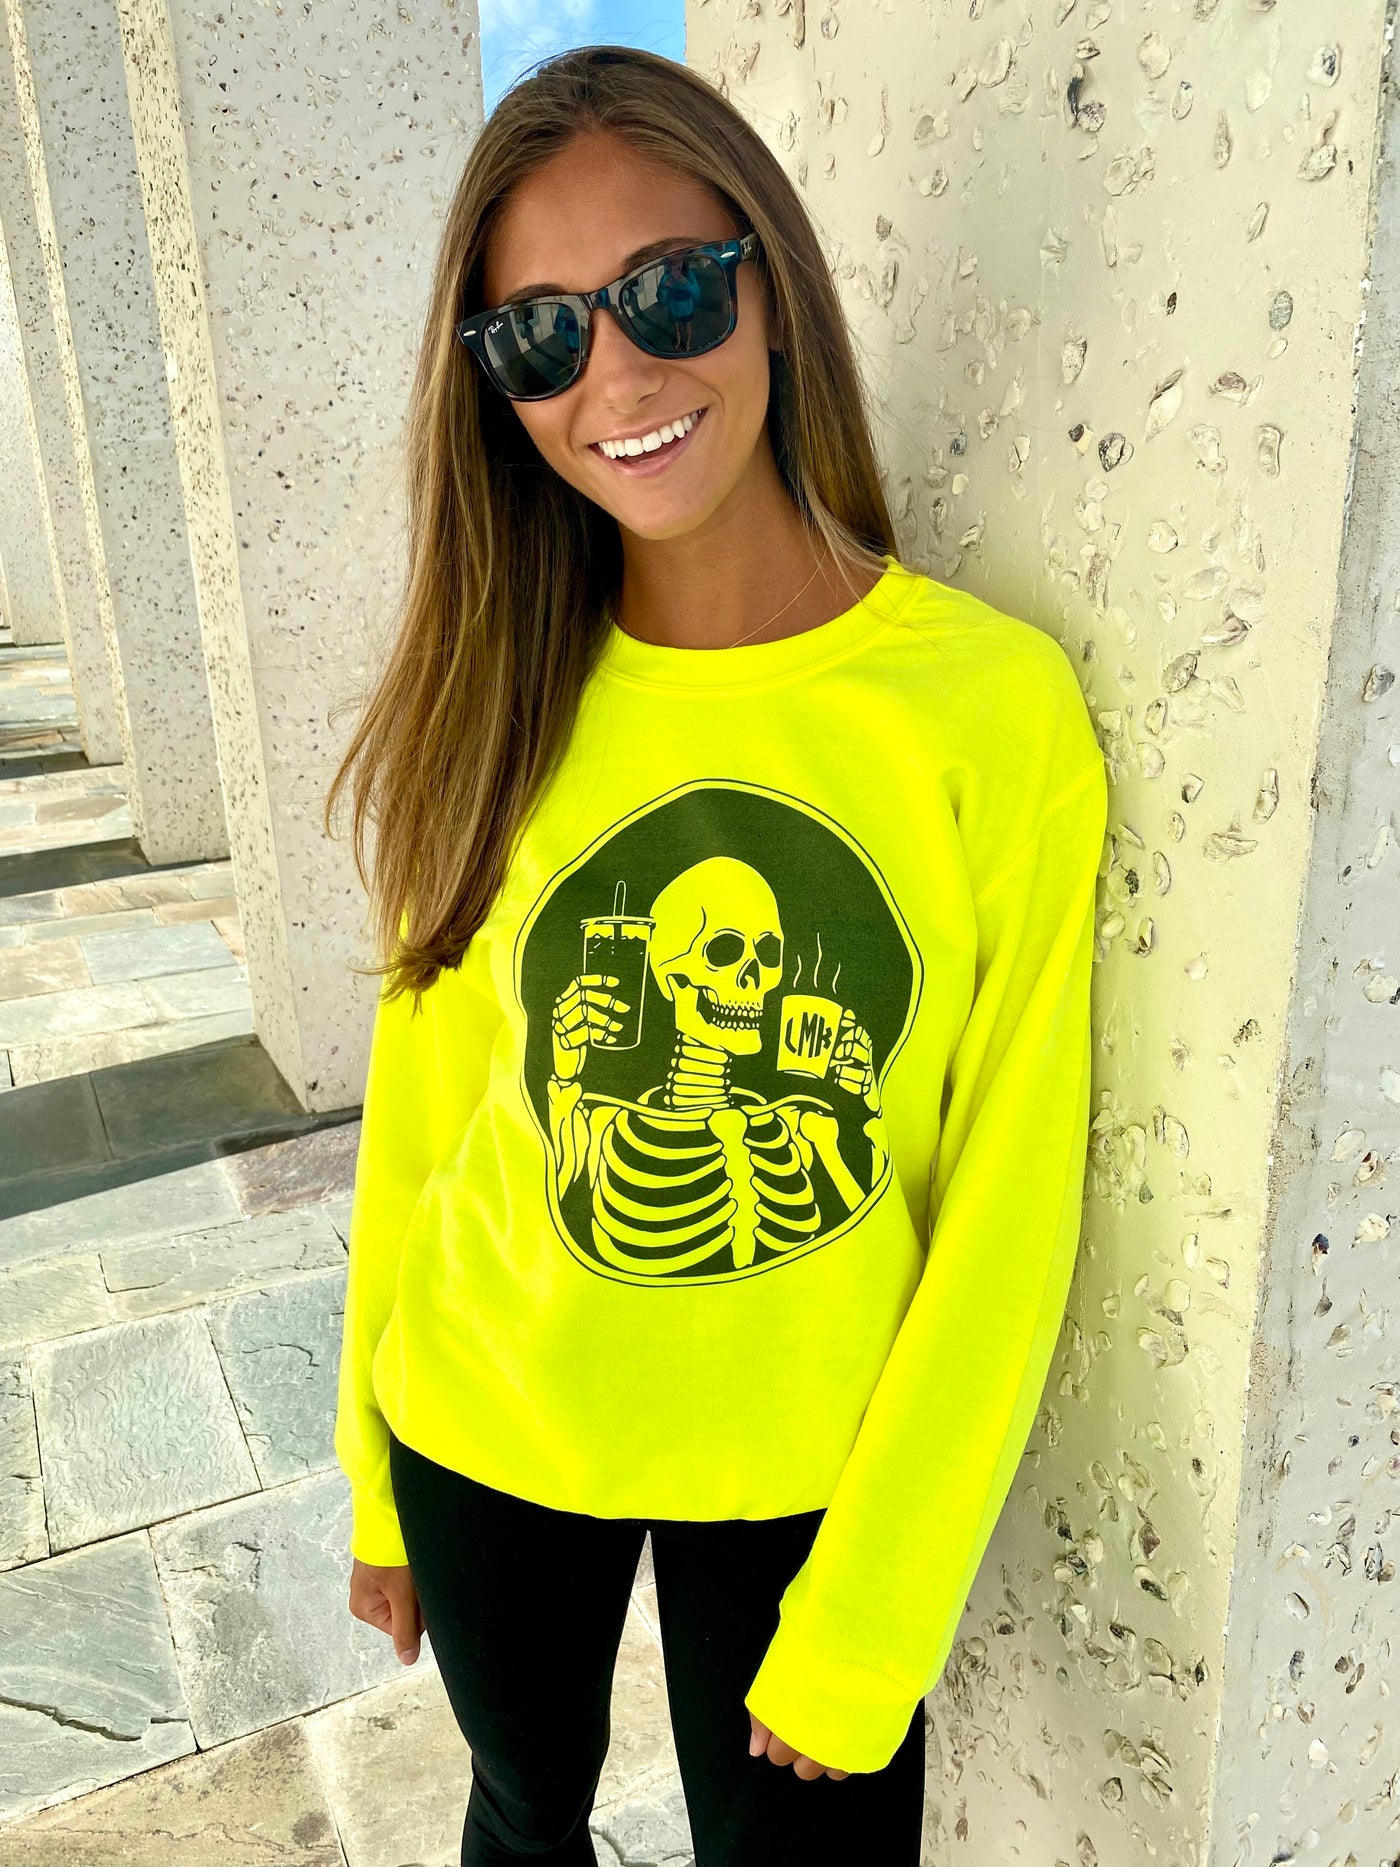 Monogrammed 'Skeleton Coffee' Neon Crewneck Sweatshirt